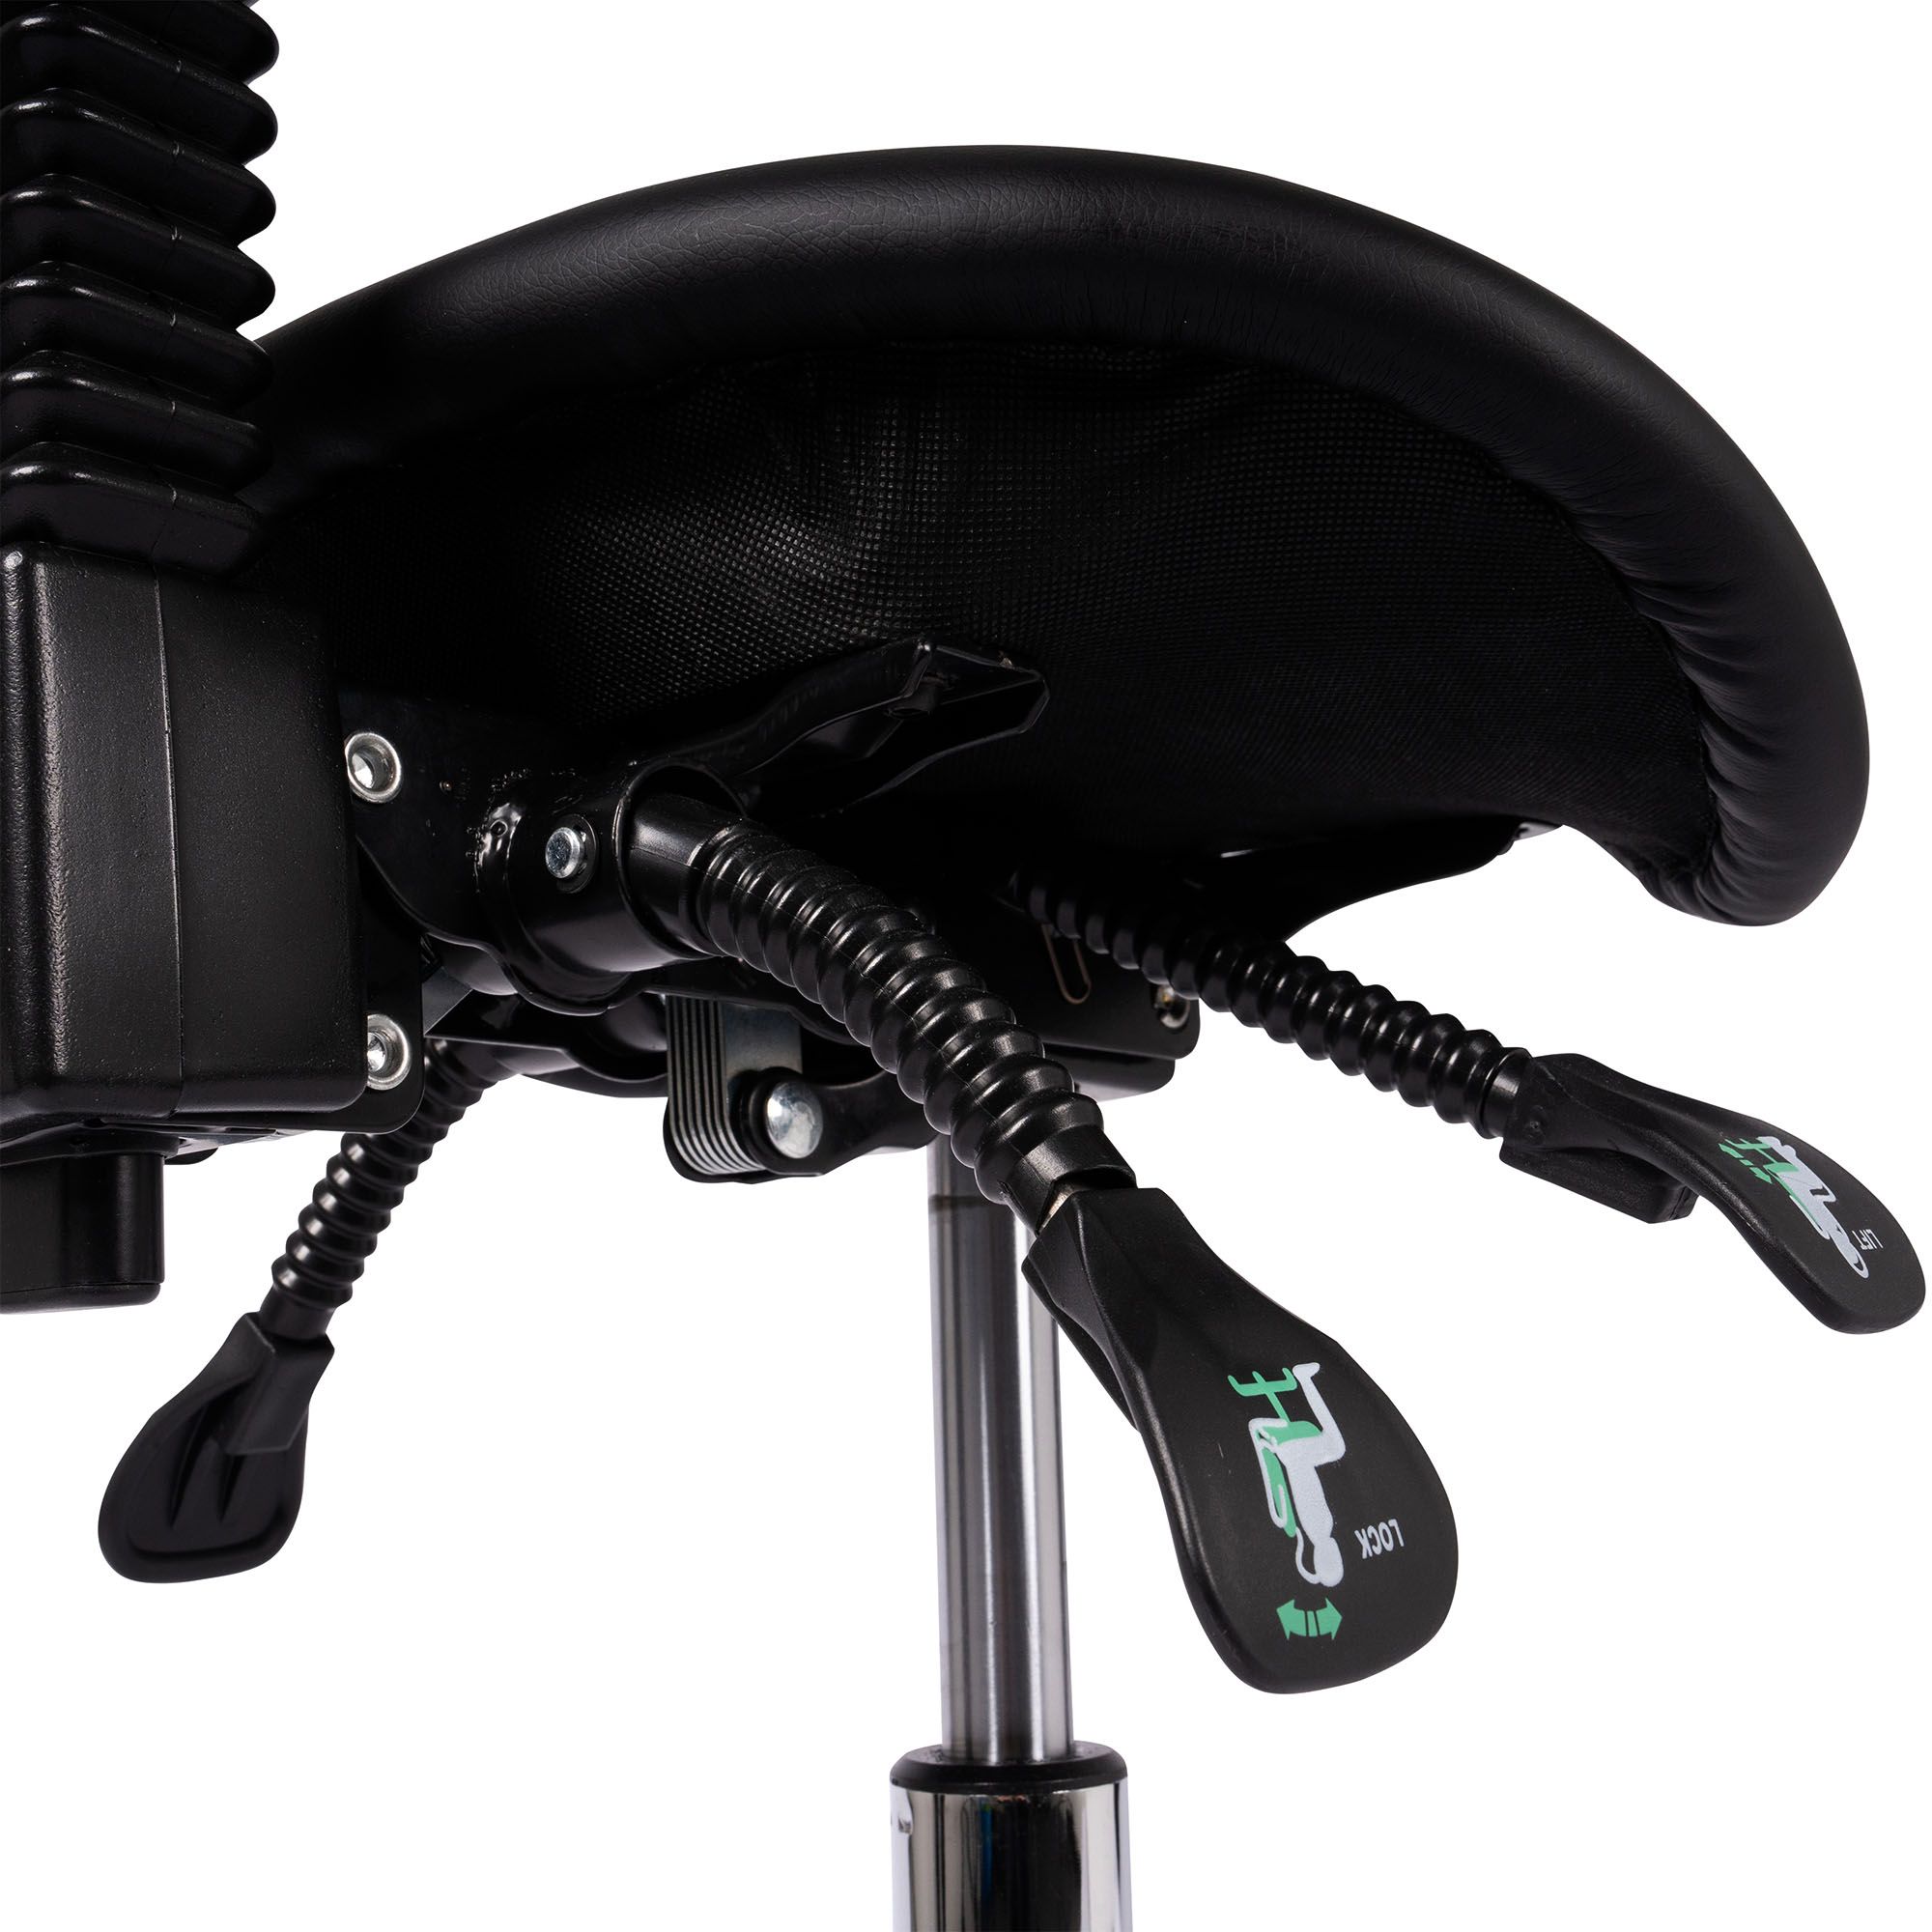 ergonomic saddle stool with backrest high version handles